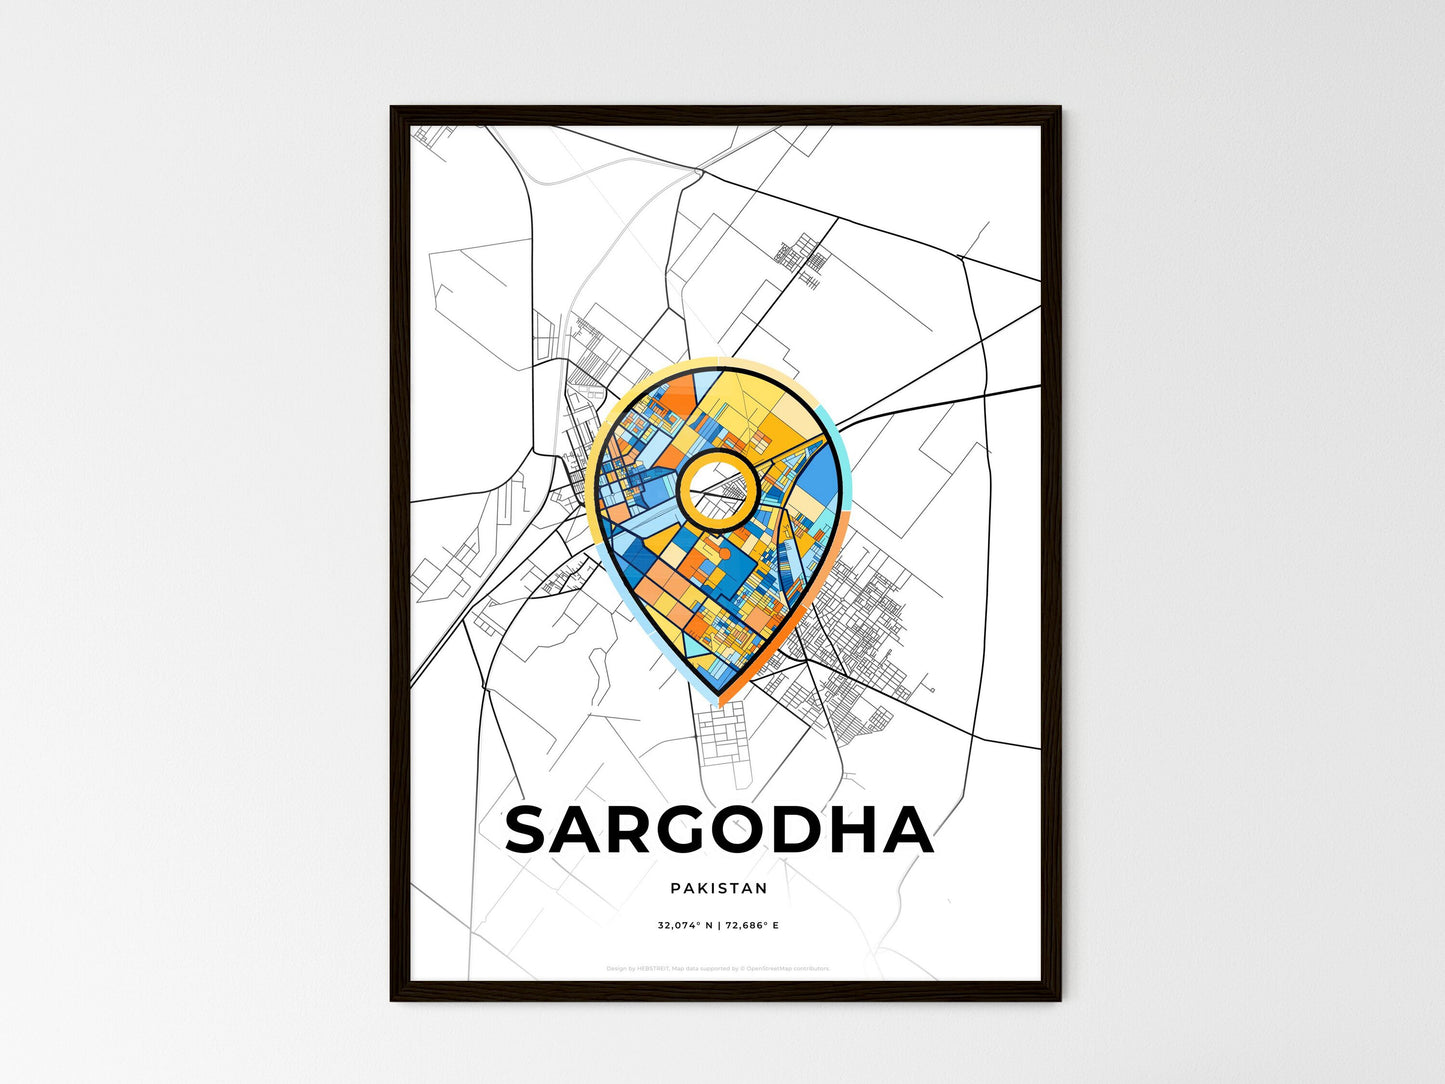 SARGODHA PAKISTAN minimal art map with a colorful icon. Style 1